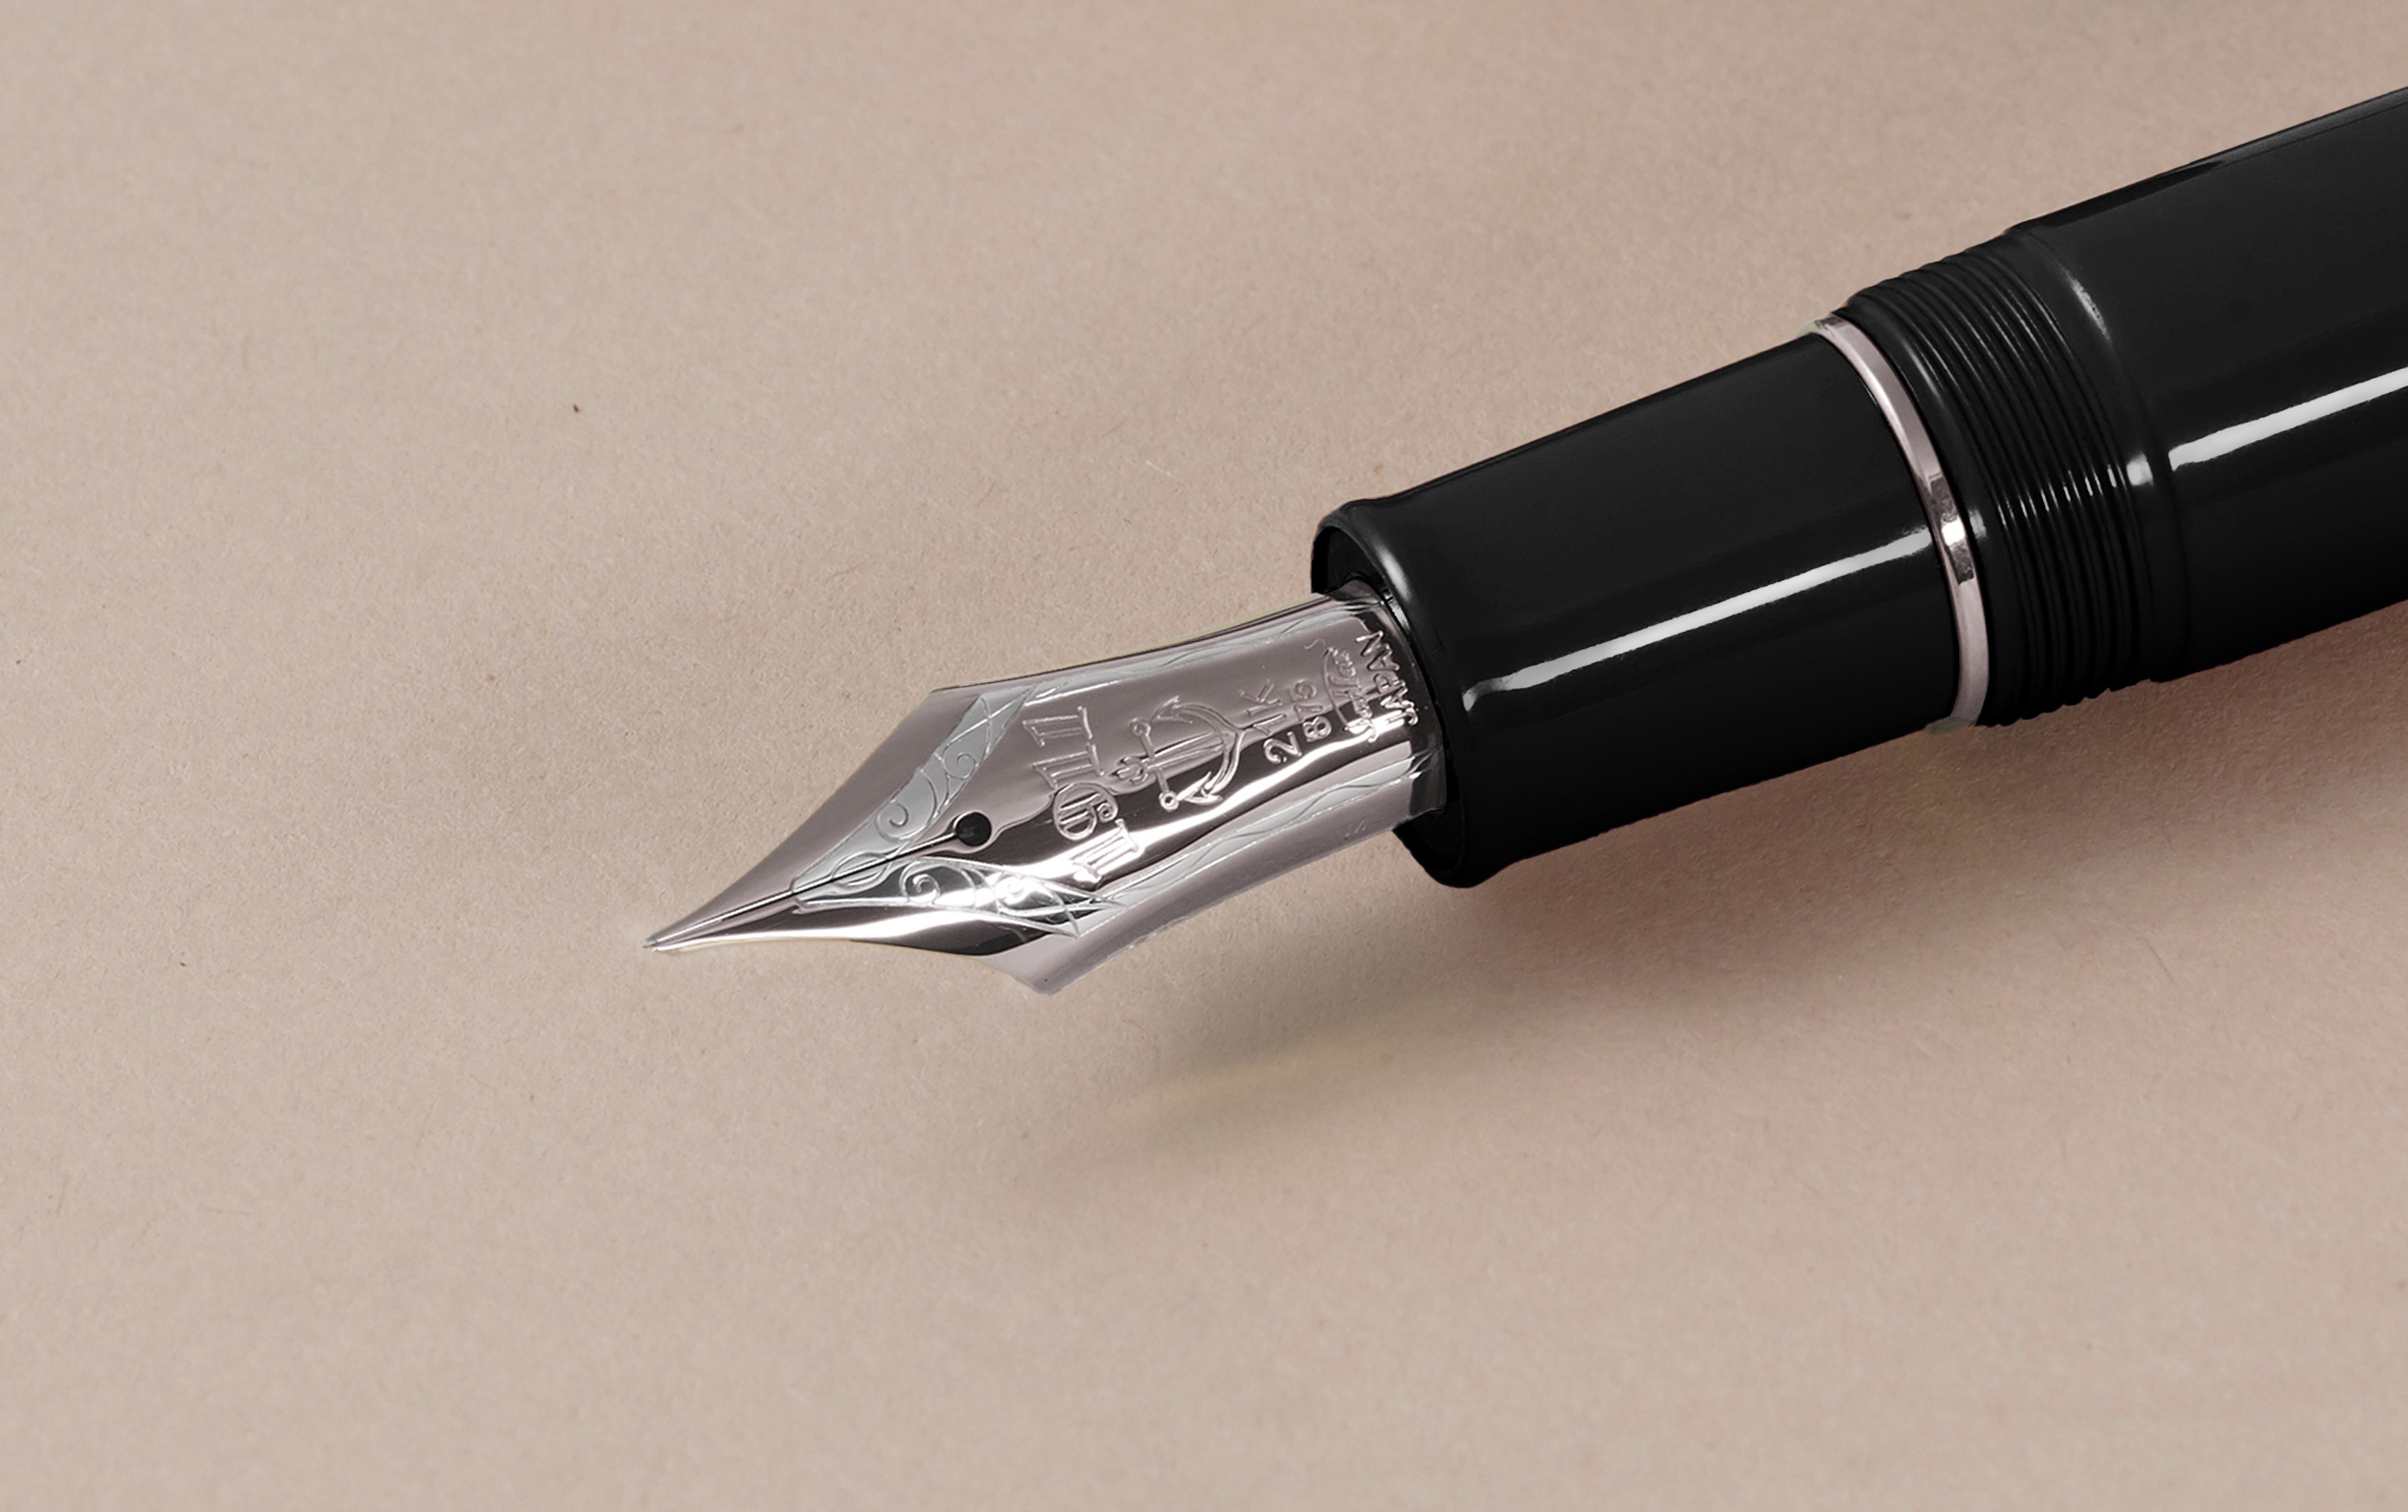 Sailor Urushi King of Pens Fountain pen, Black